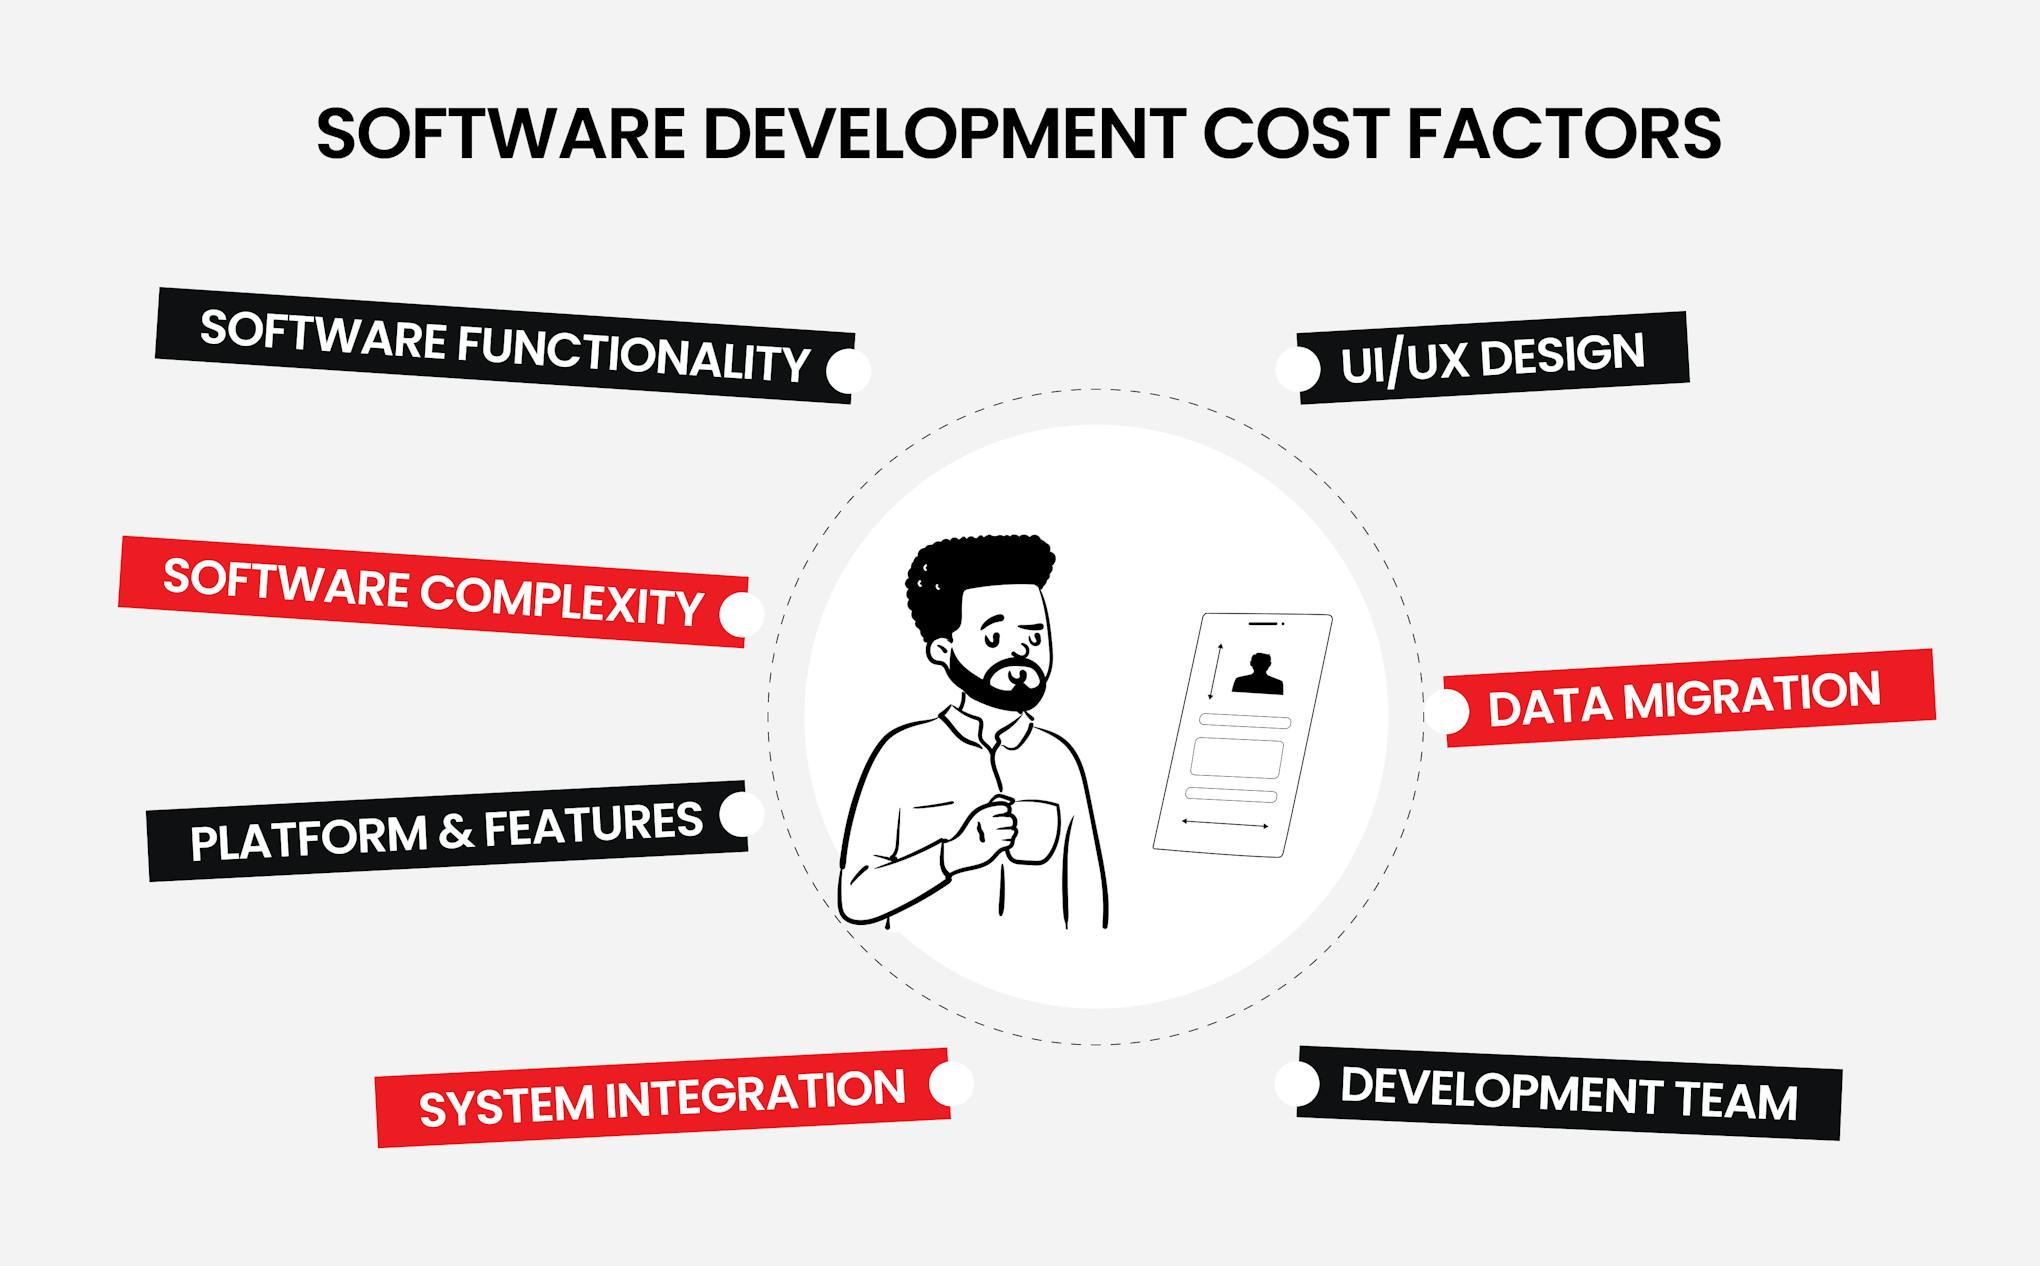 Software development cost factors.